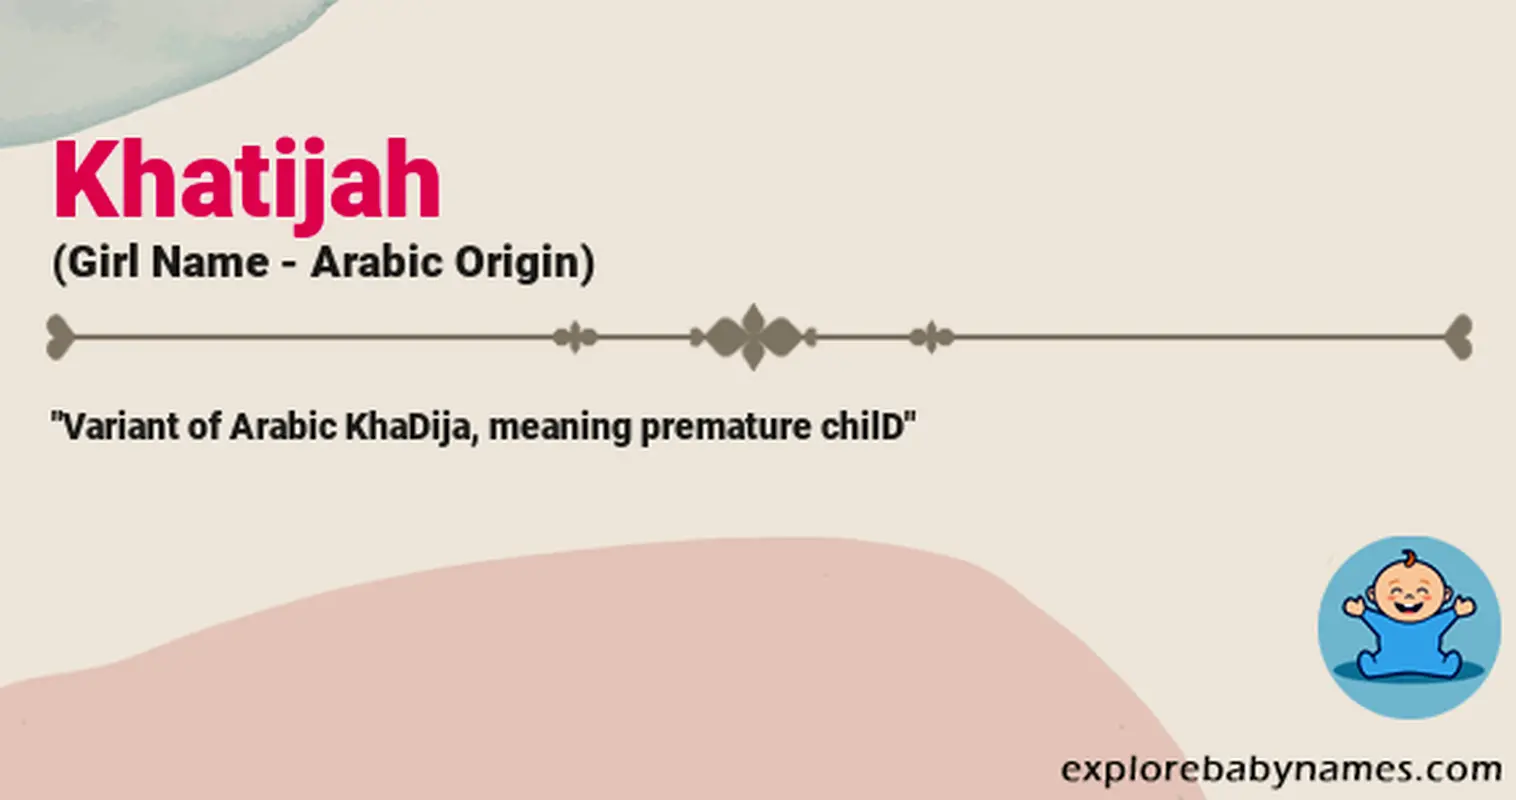 Meaning of Khatijah